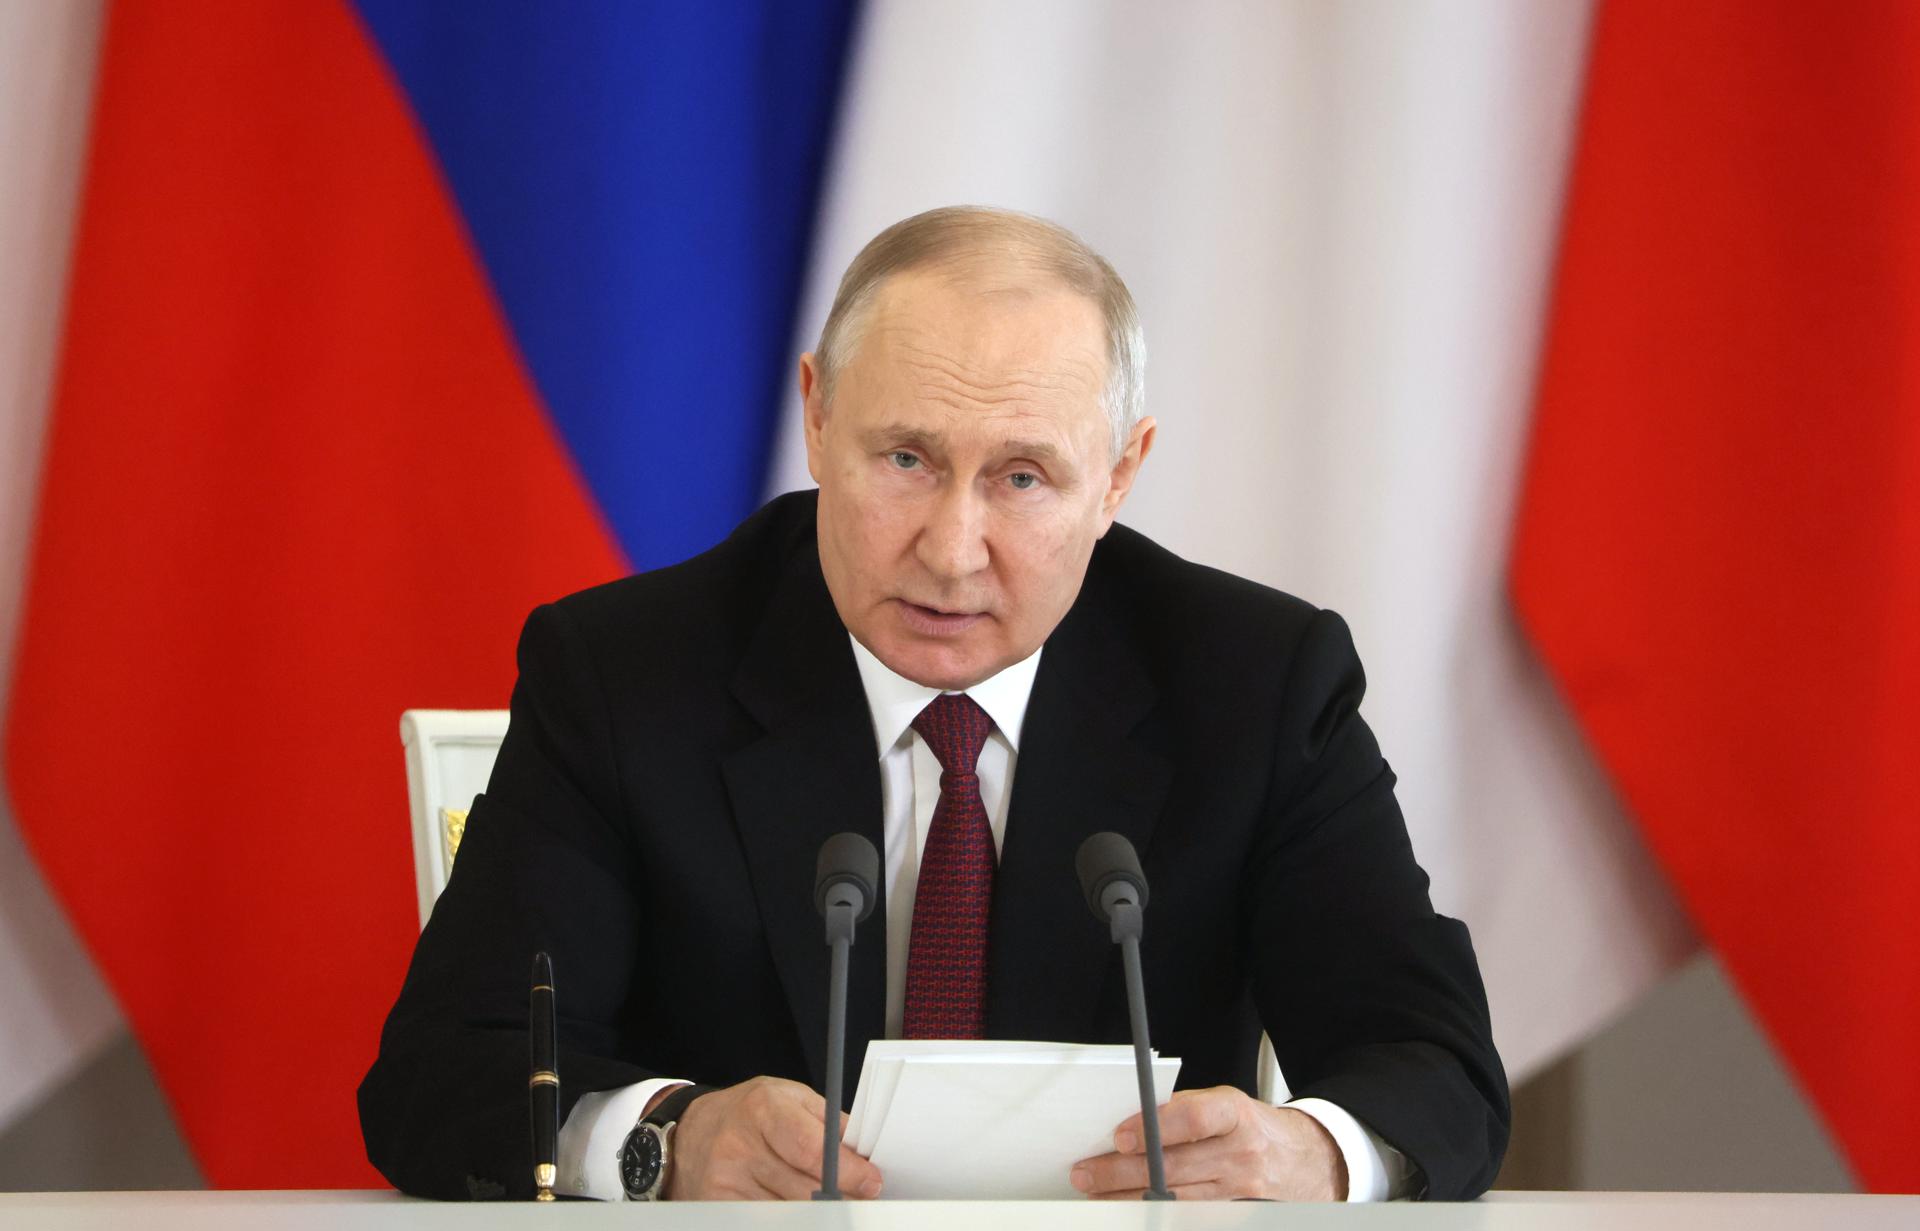 El presidente ruso, Vladímir Putin. EFE/EPA/MIKHAIL METZEL / SPUTNIK / KREMLIN POOL CRÉDITO OBLIGATORIO